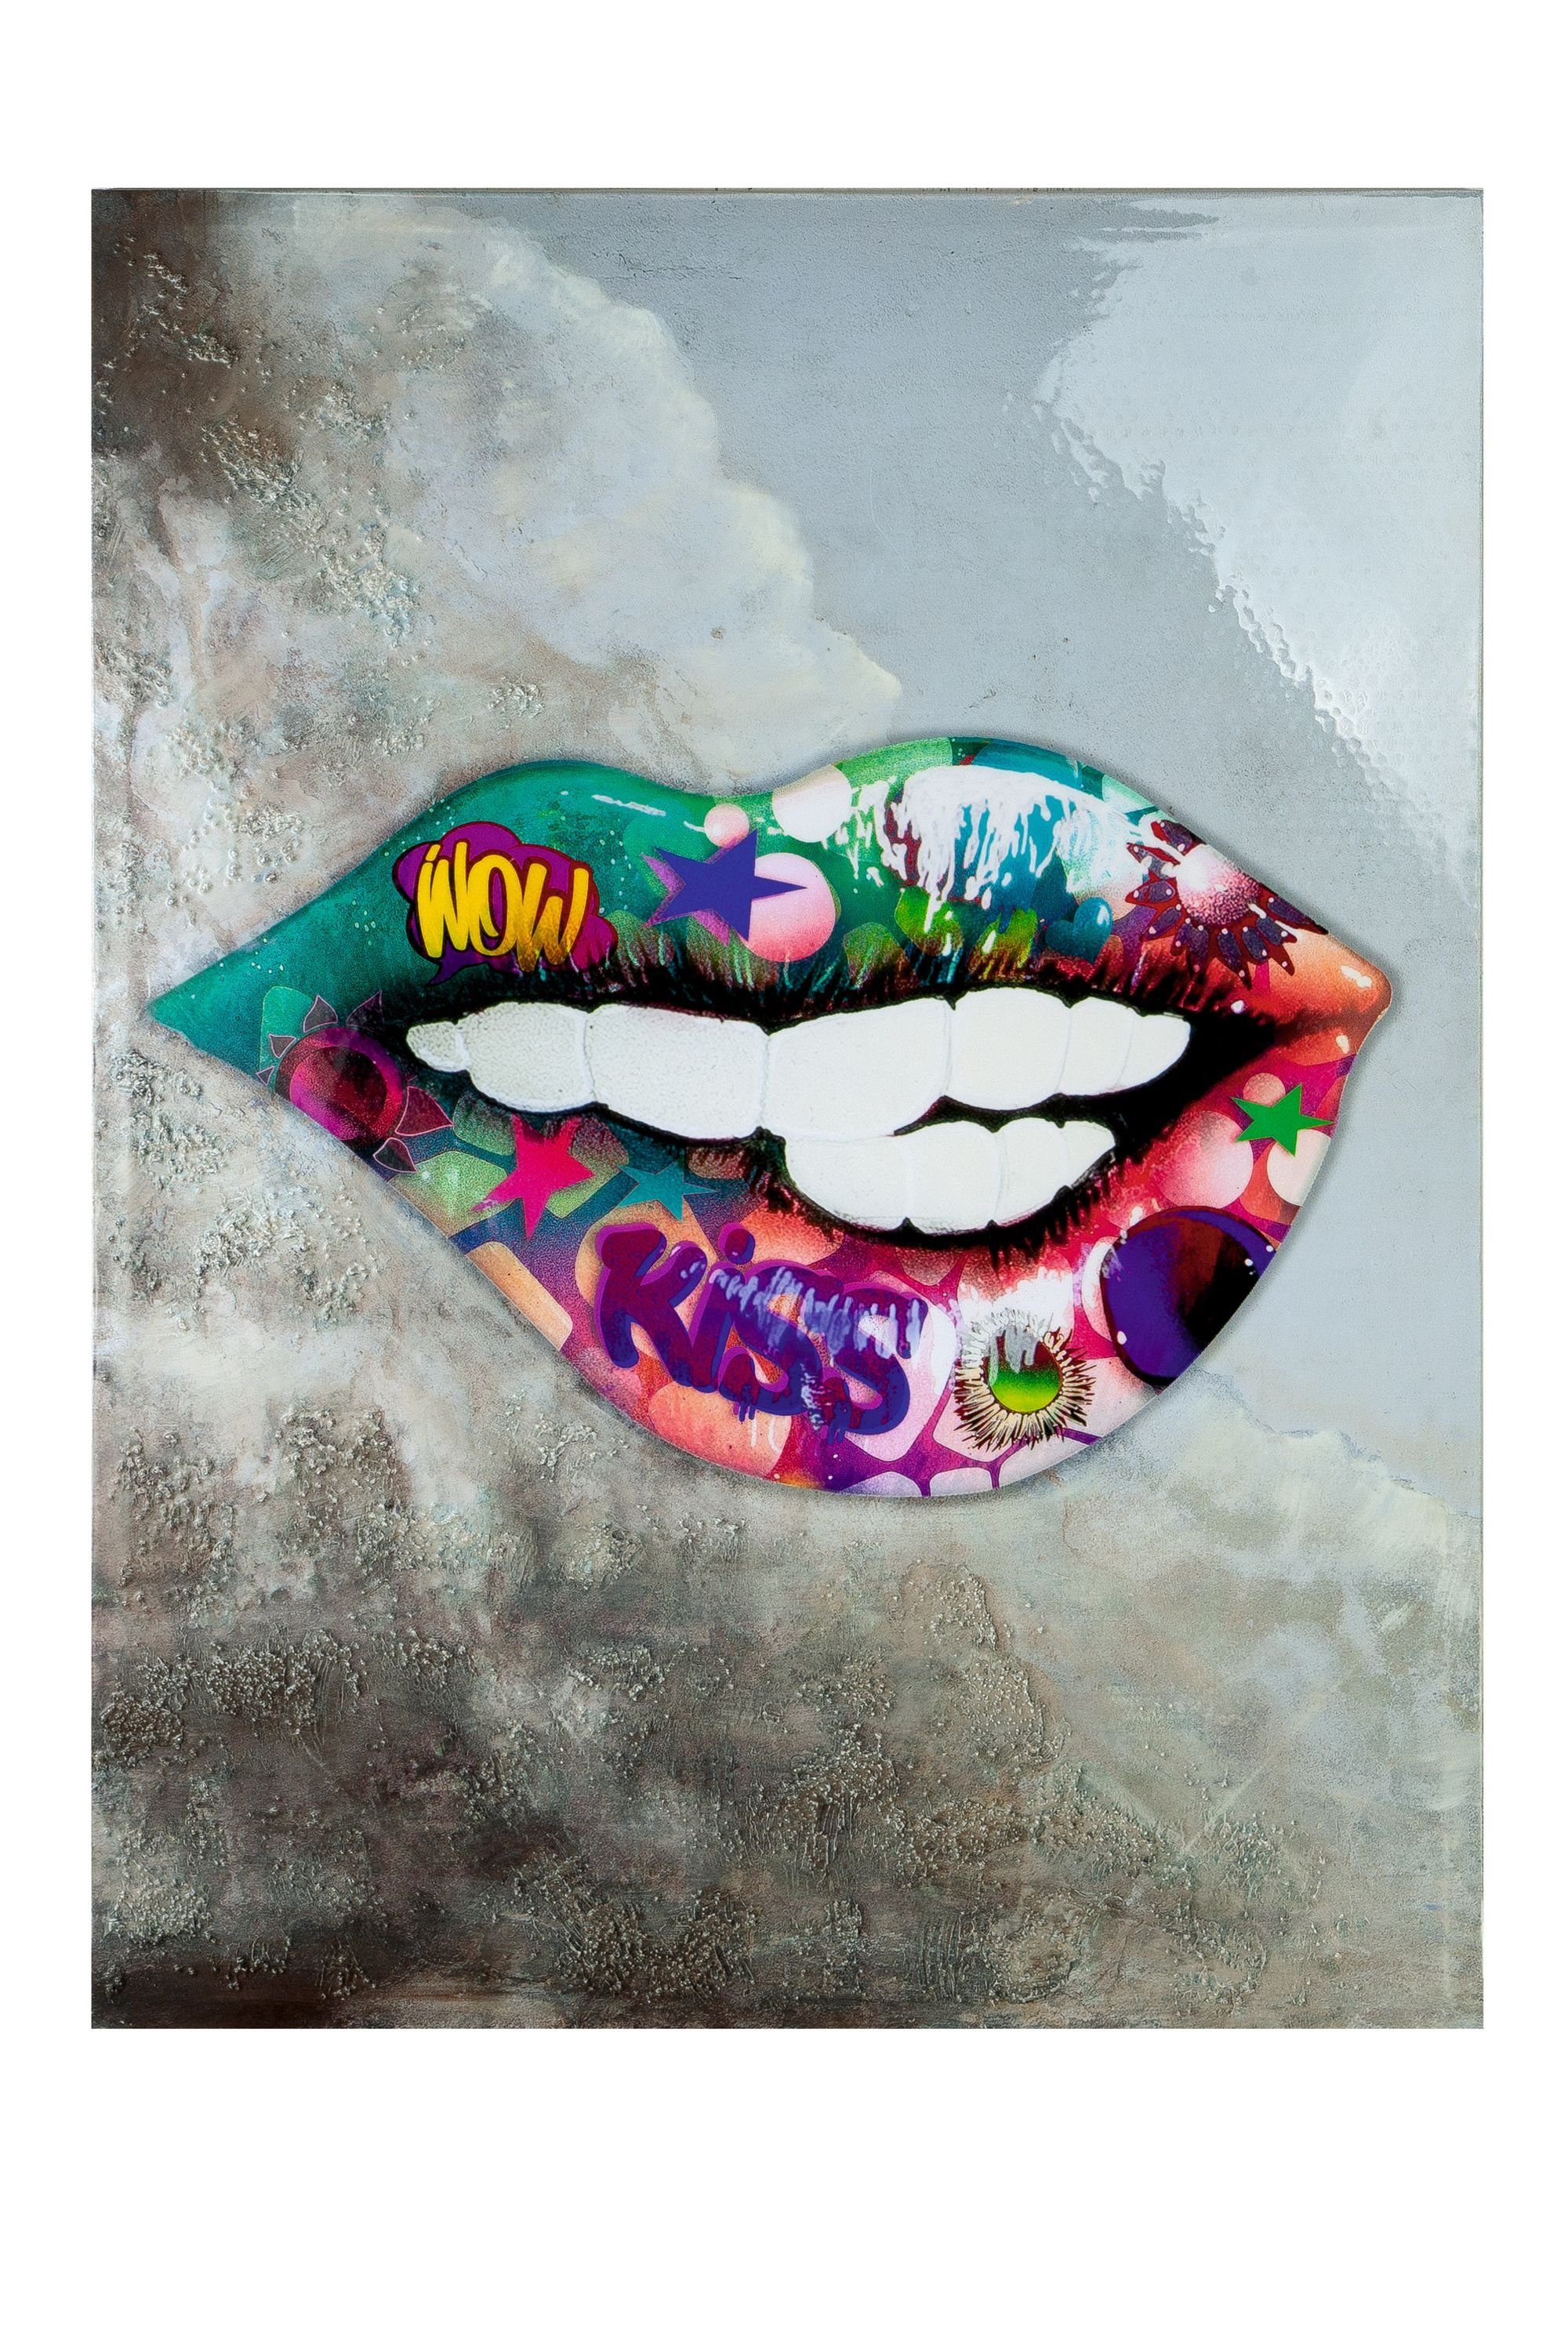 H. GILDE - 120cm Kiss 90cm mehrfarbig Bild Art Street B. Gemälde - GILDE x